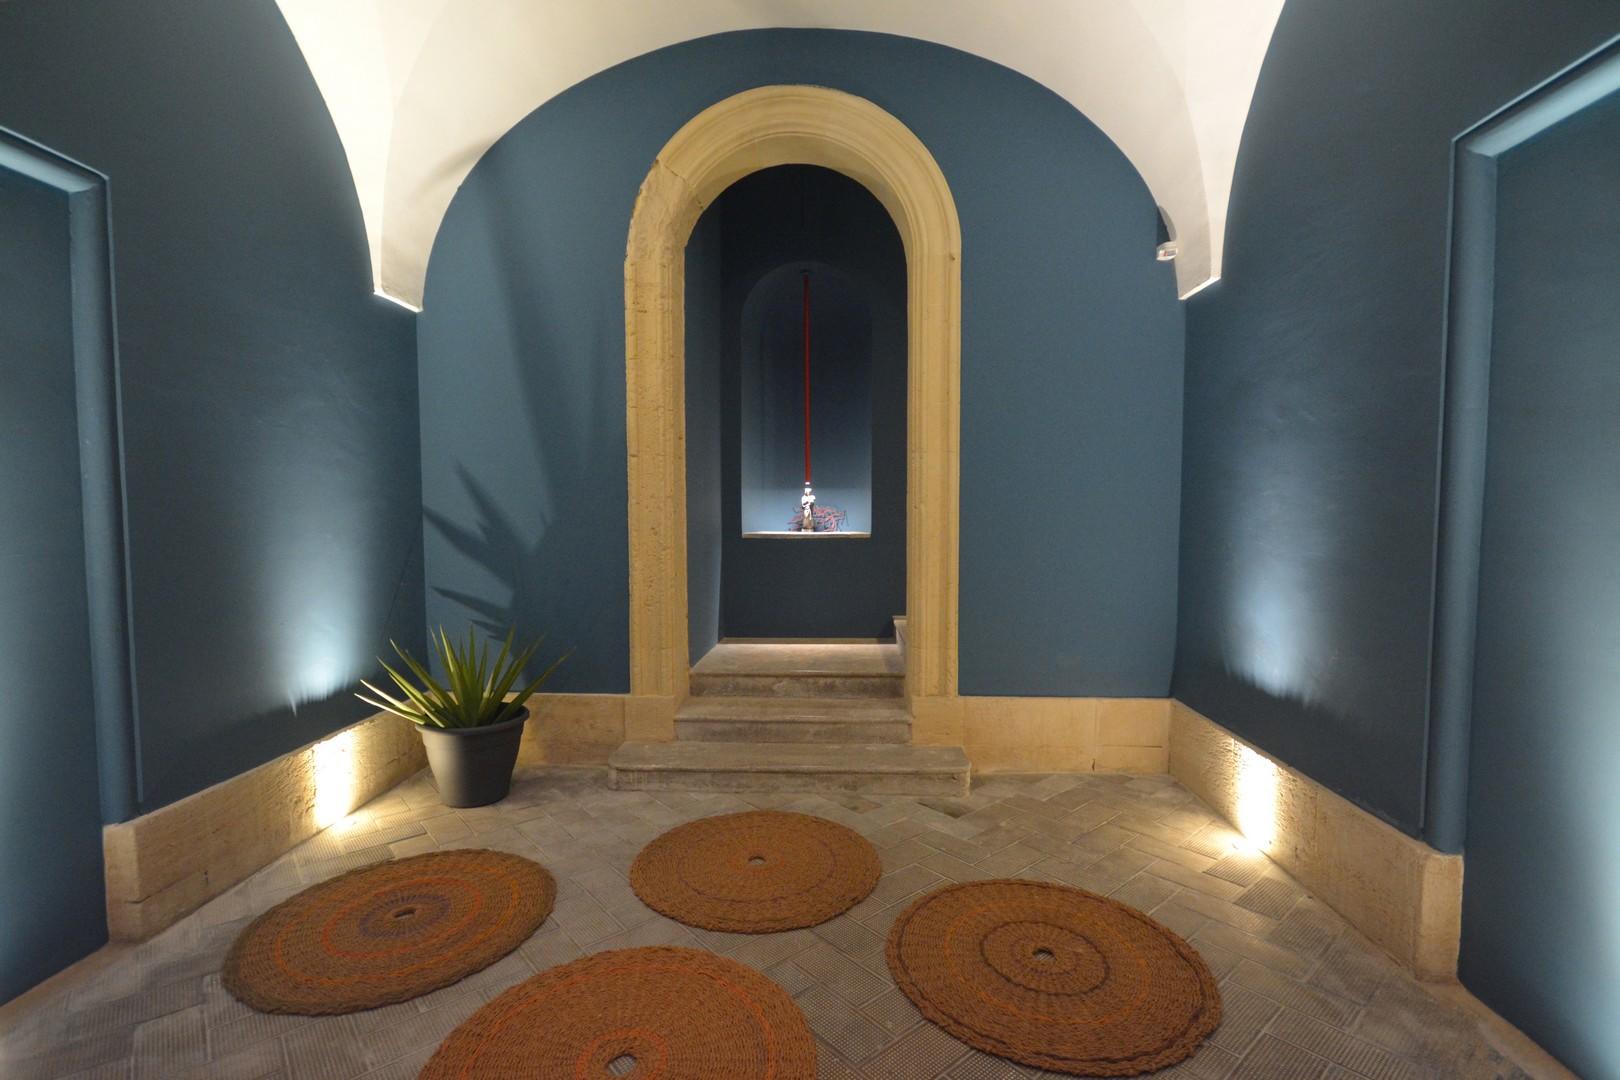 Entrance hall - detail